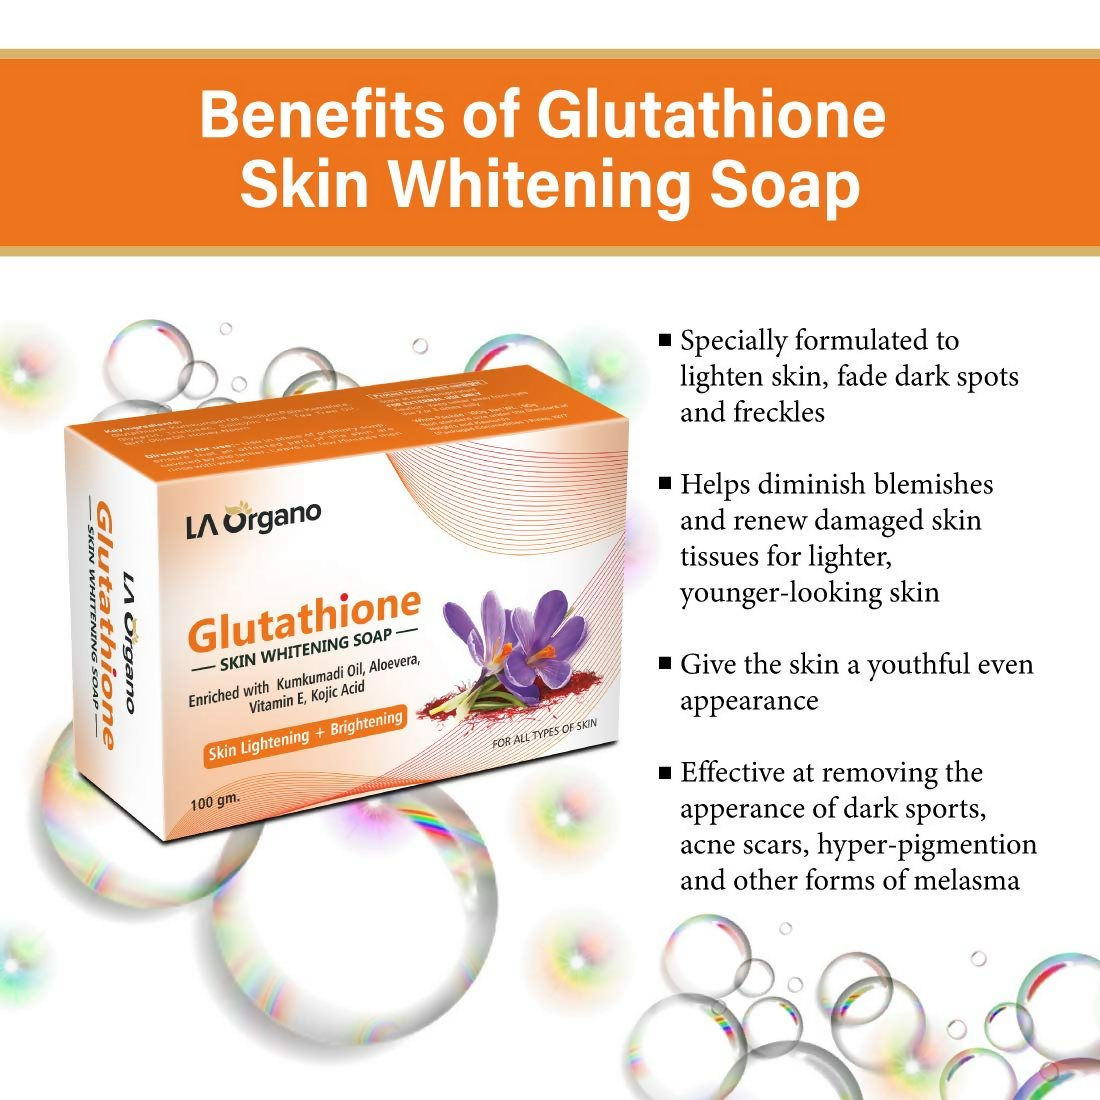 LA Organo Glutathione Kumkumadi Skin Lightening & Brightening Soap